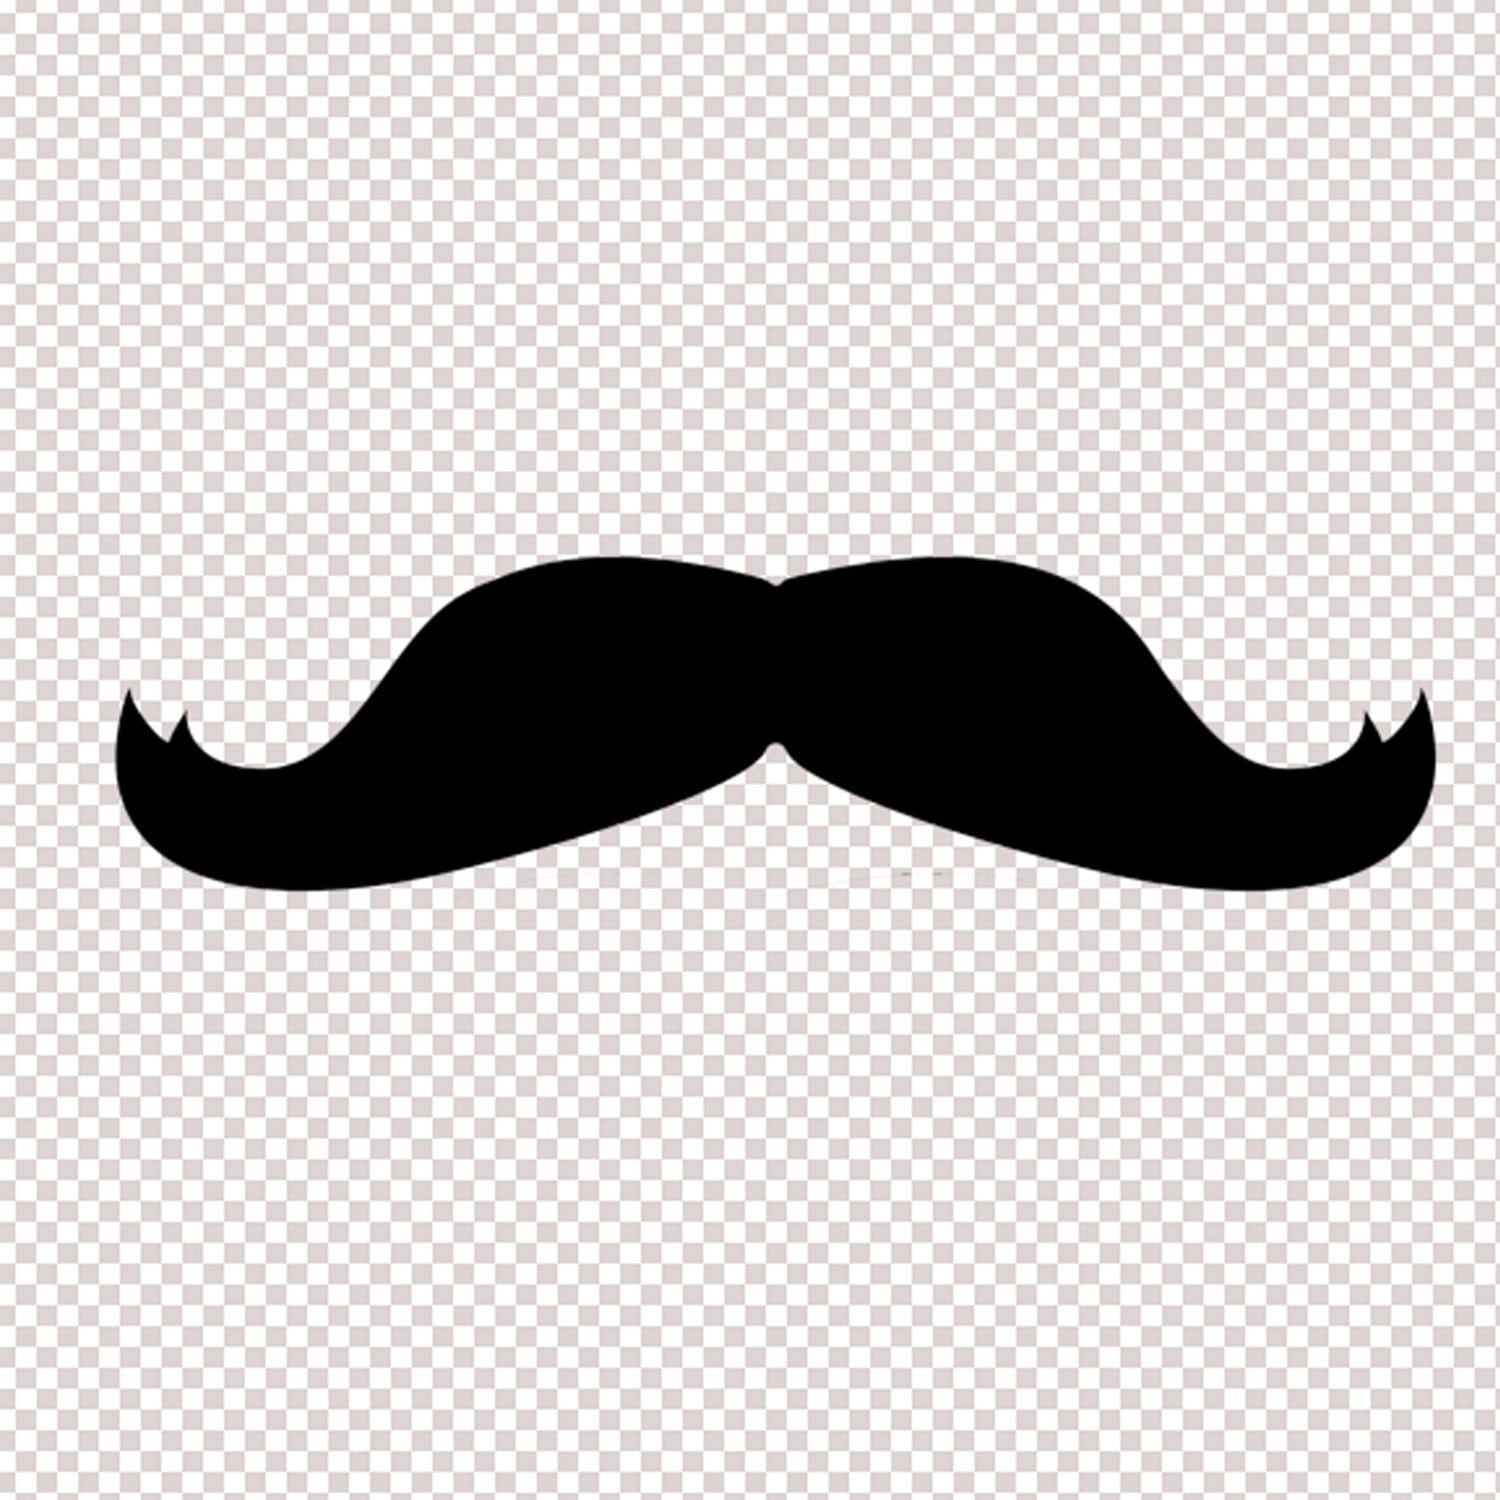 moustache mustache upper lip digital stamp by inthePublicDomain. source: im...